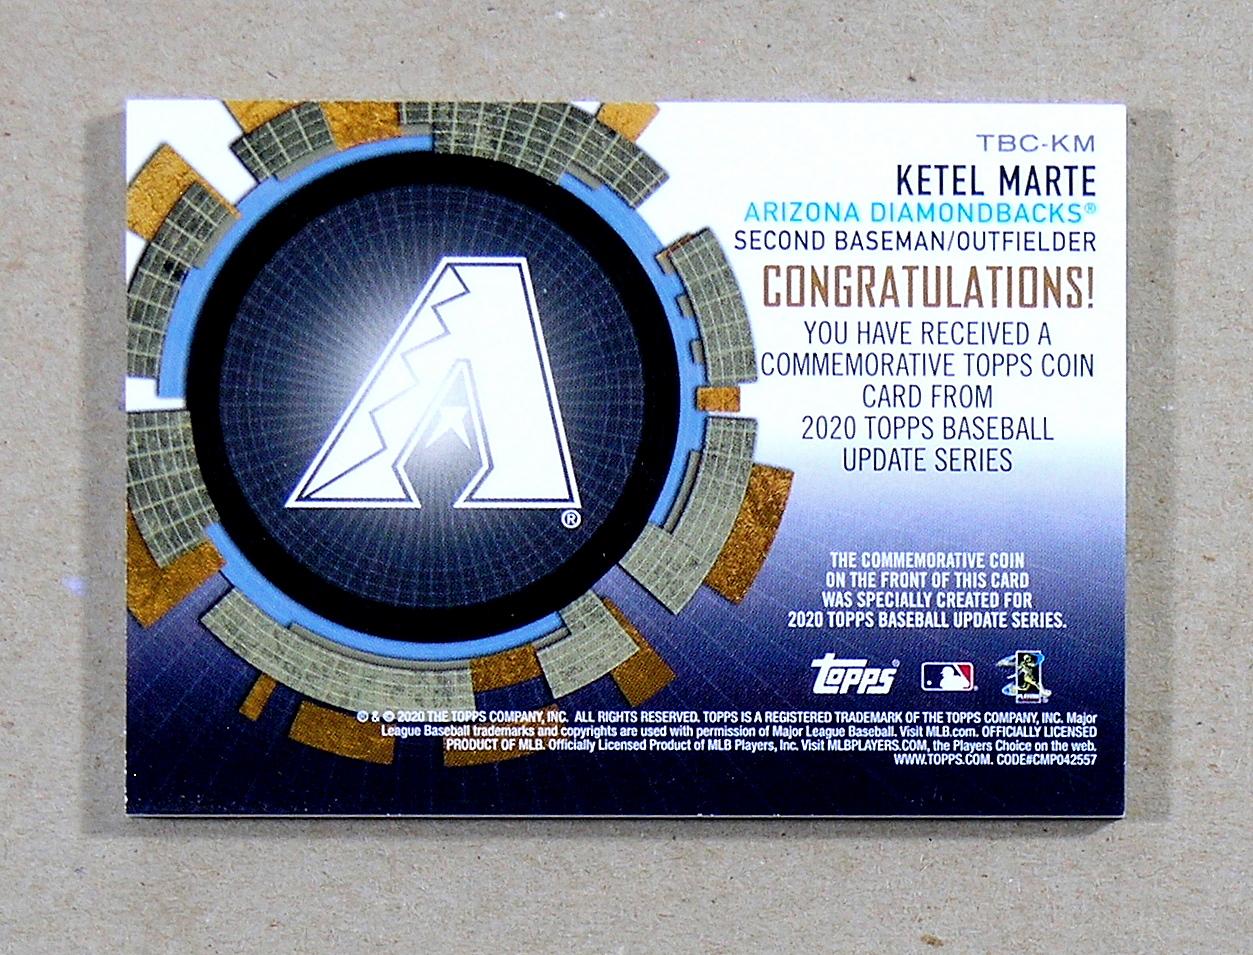 2020 Topps Commemorative Coin Card #TBC-KM Ketel Marte Arizona Diamondbacks